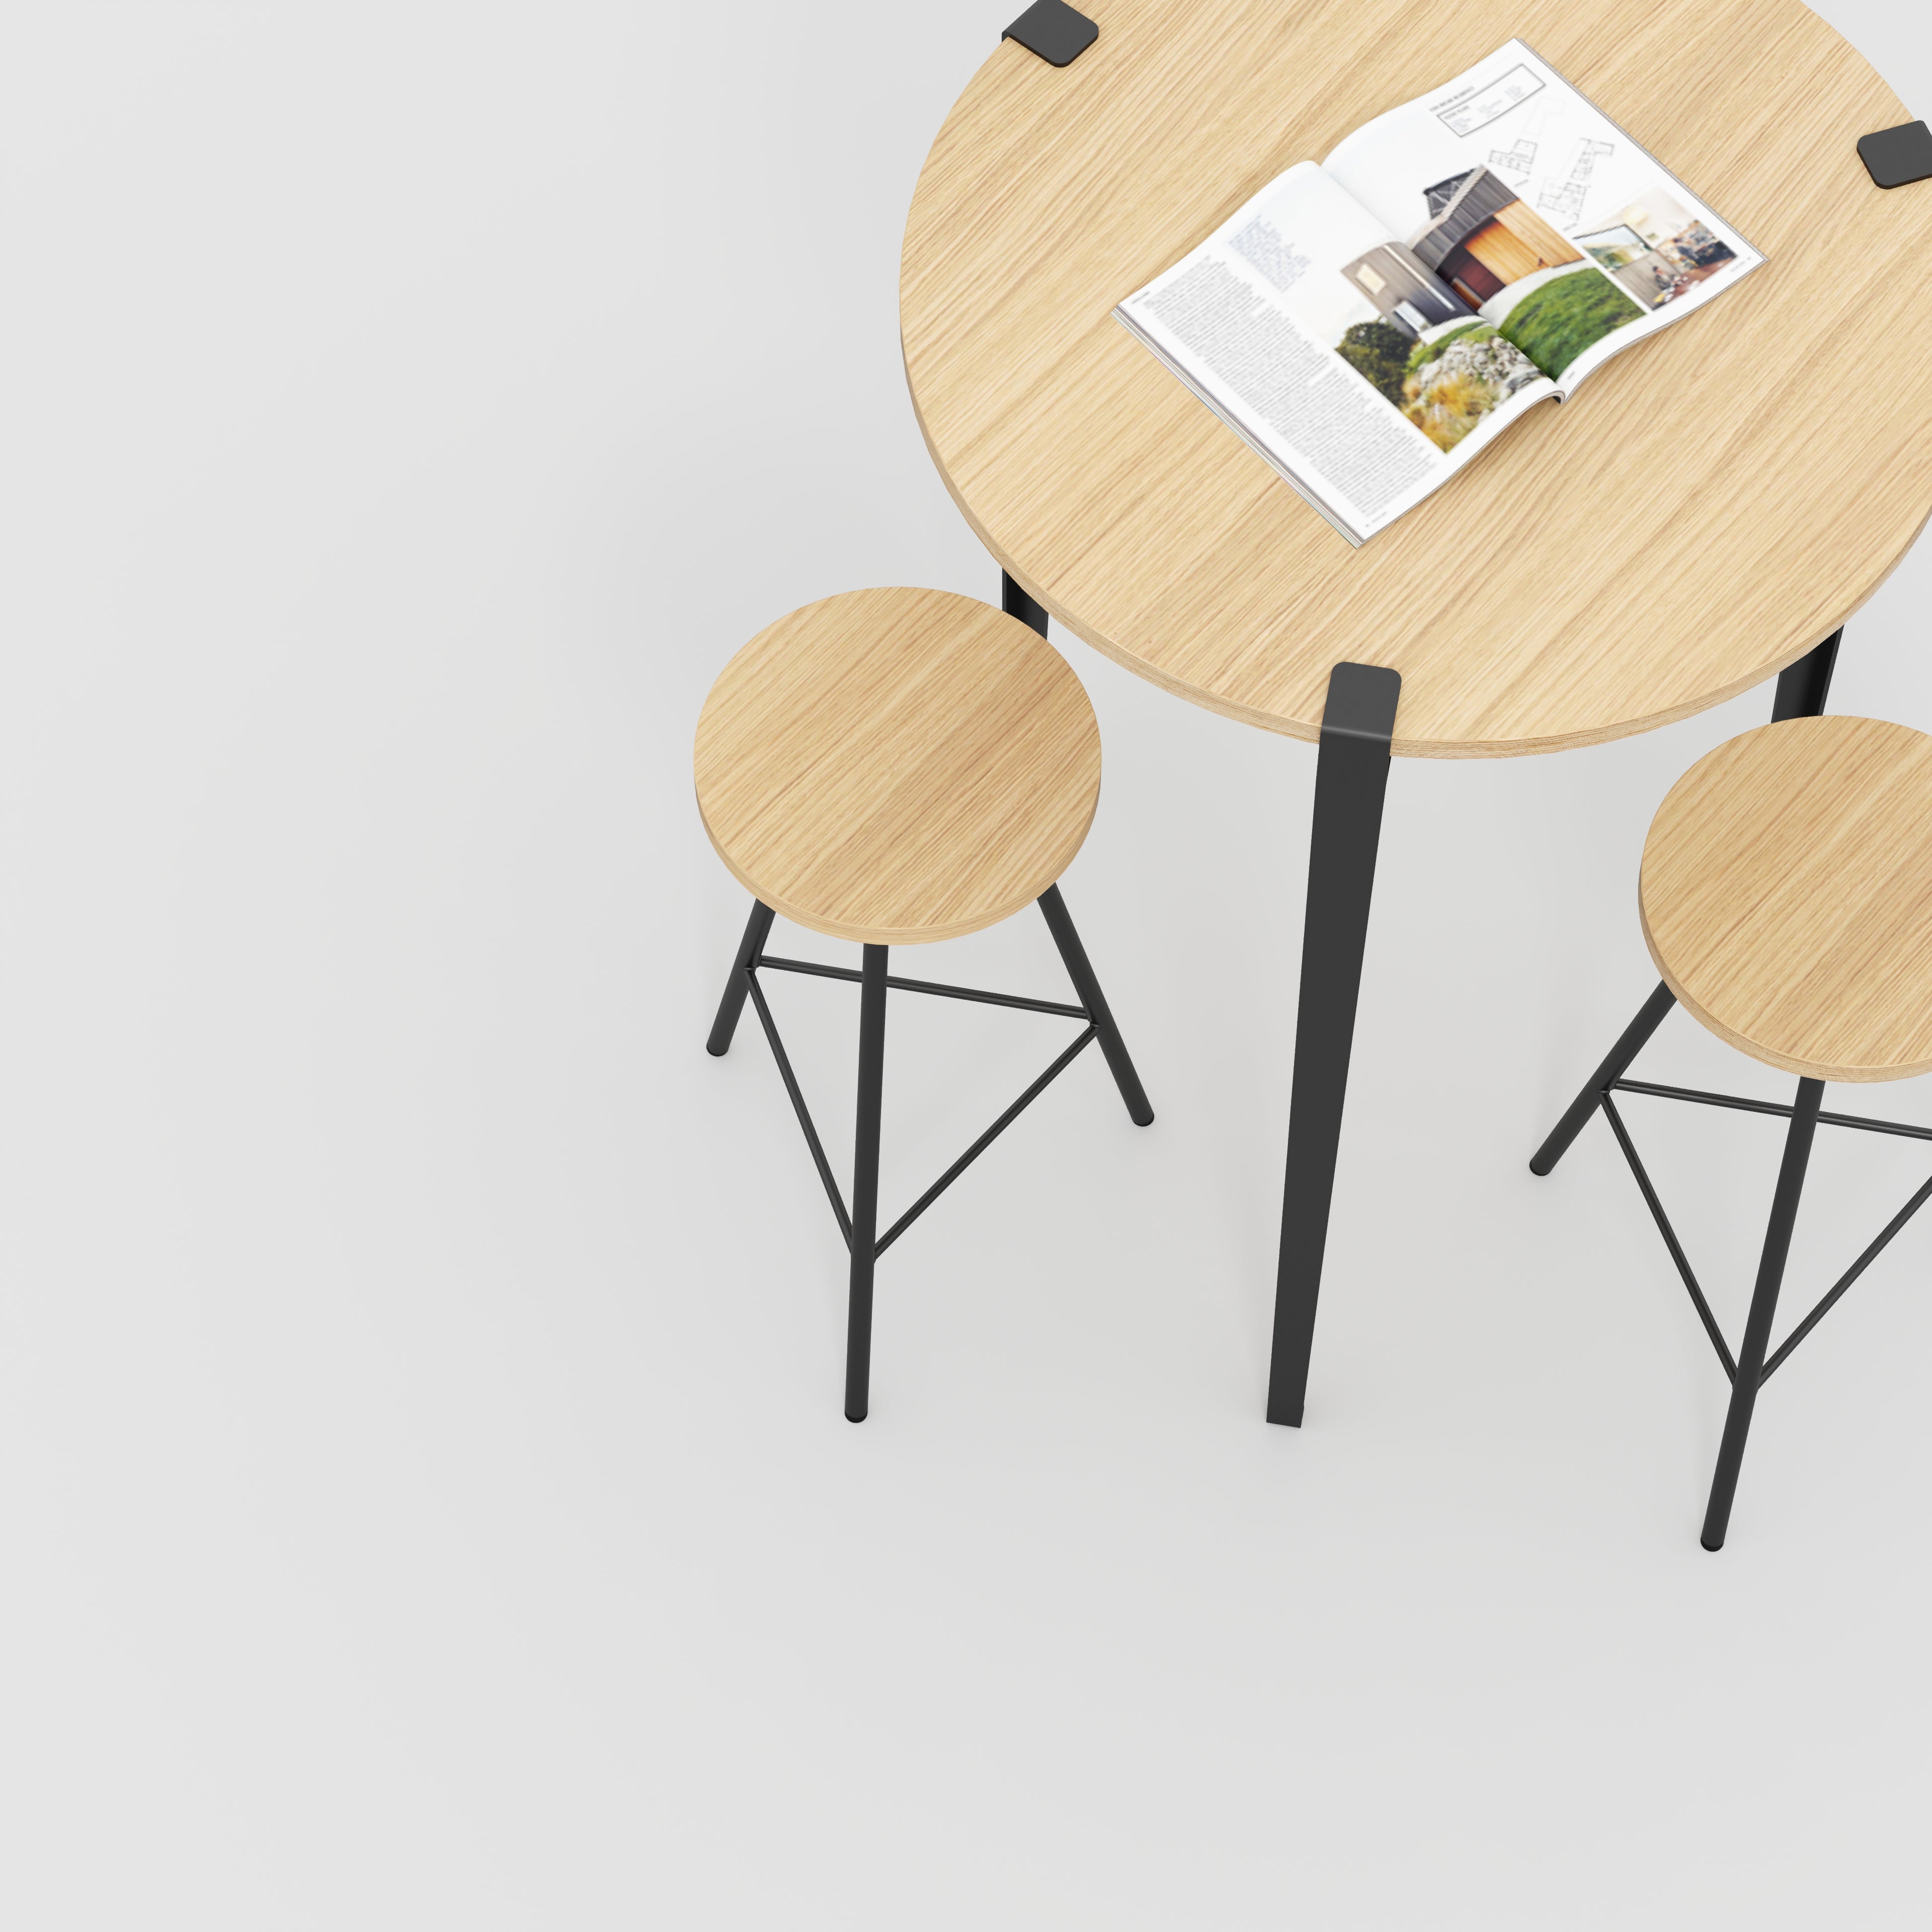 Round Table with Black Tiptoe Legs - Plywood Oak - 800(dia) x 1100(h)